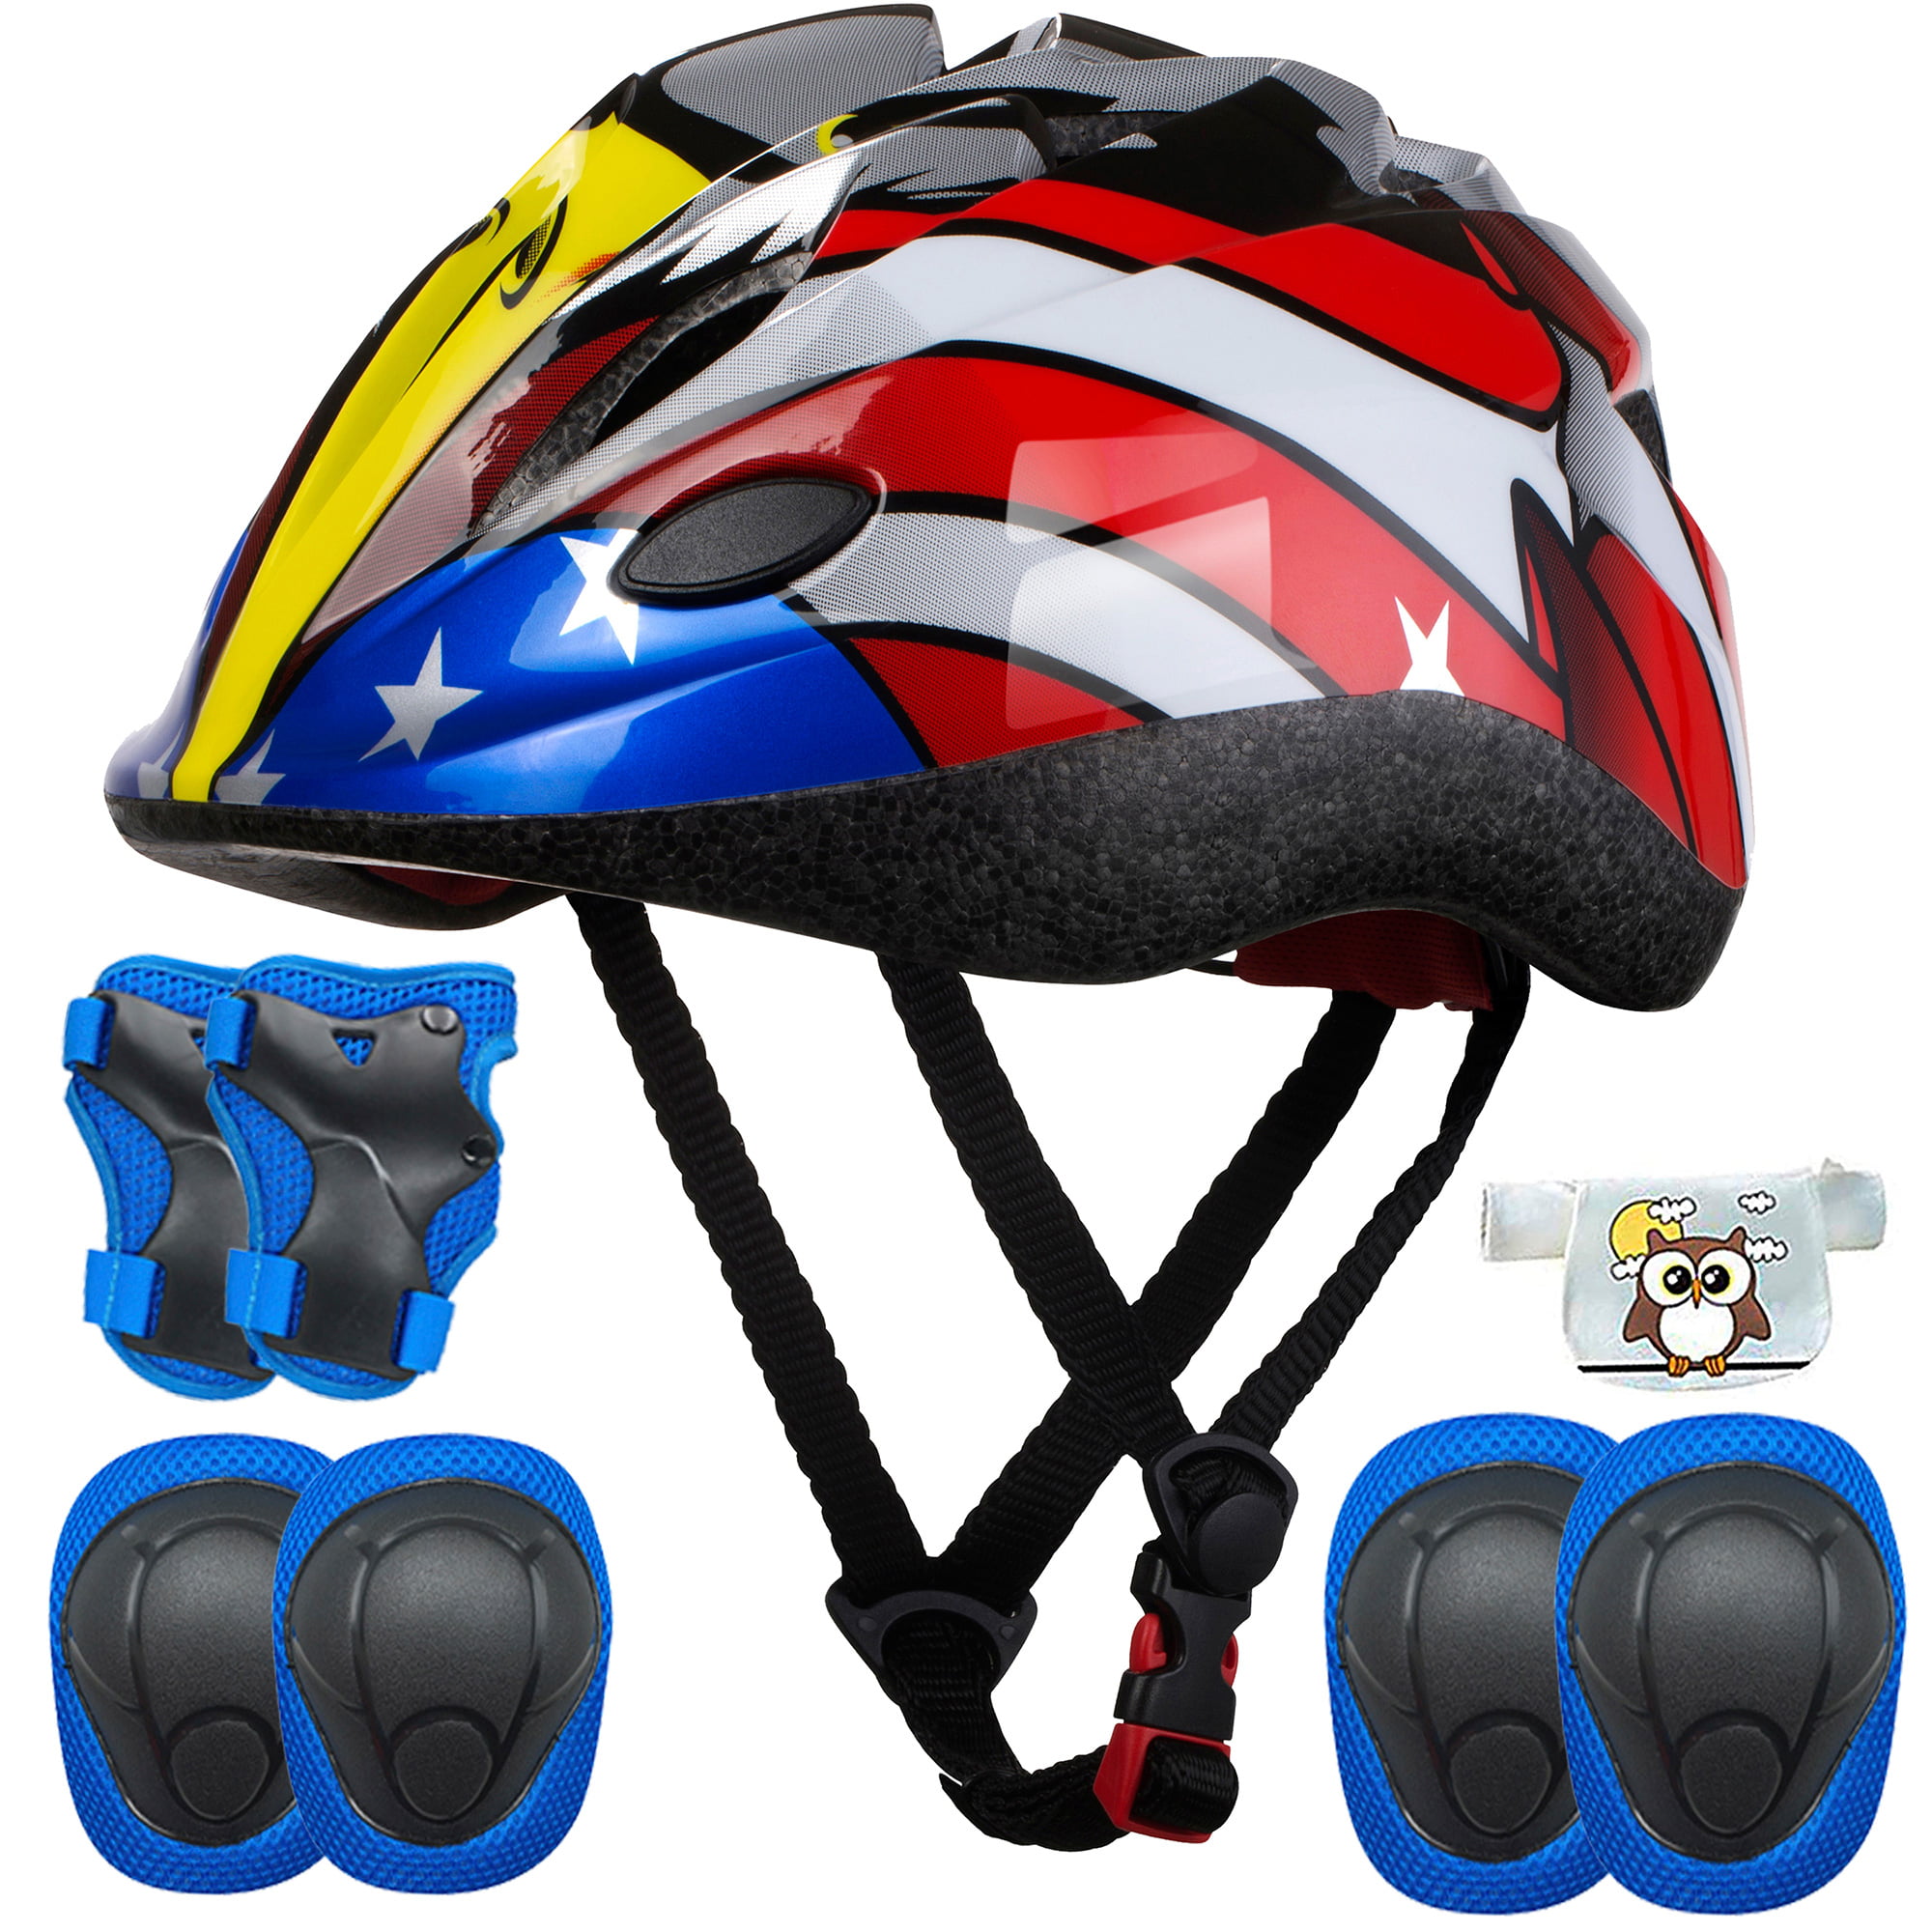 Knee Pads+Elbow Pads+Wrist Pads+ Helmet Adjustable Helmets for Kids UAAO Kids Protective Gear Set,Roller Skating Skateboard BMX Scooter Cycling Protective Gear Pads 